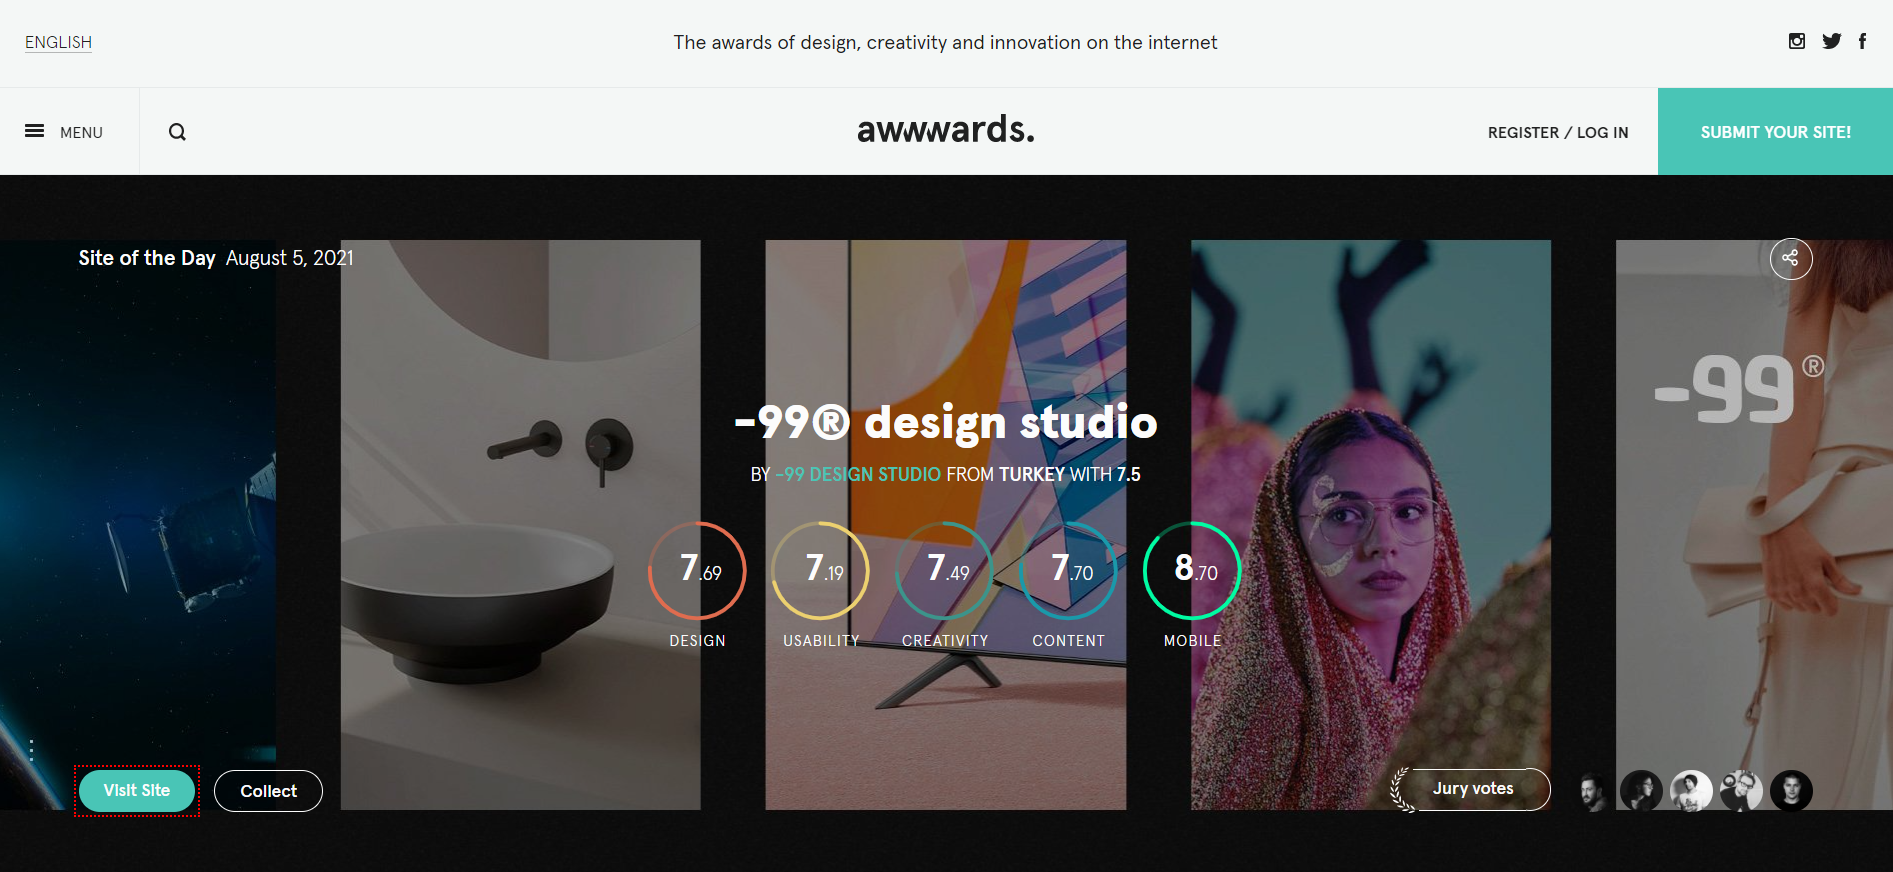 foso hilo Ewell Los mejores sitios para inspirar tu diseño web - Wandae Marketing